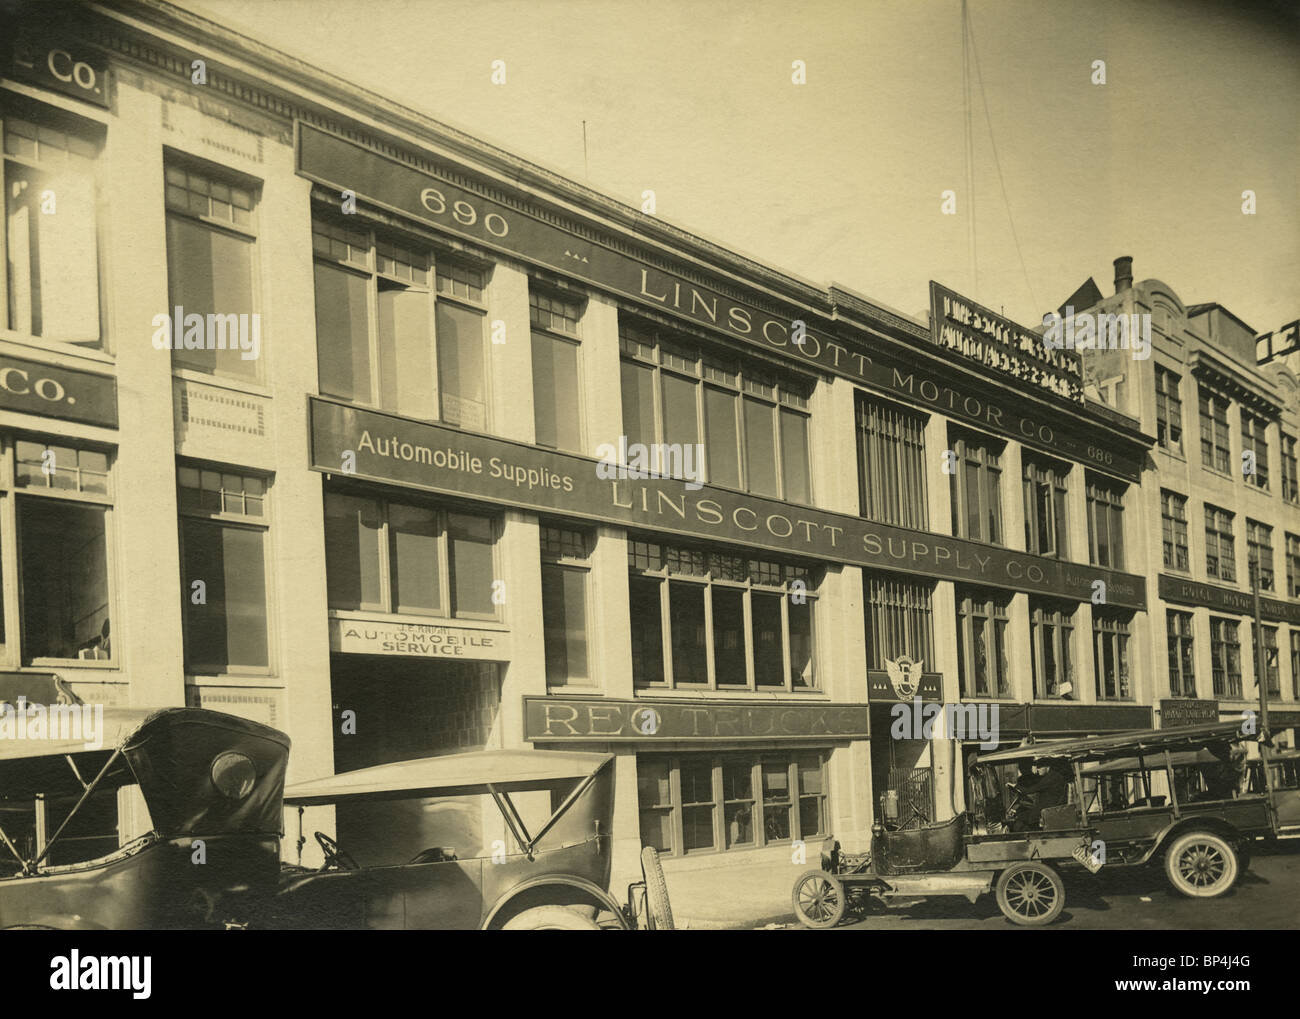 Octobre 1920 photo de l'extérieur de la Linscott Motor Company, 690 Beacon Street, Boston, Massachusetts. Banque D'Images